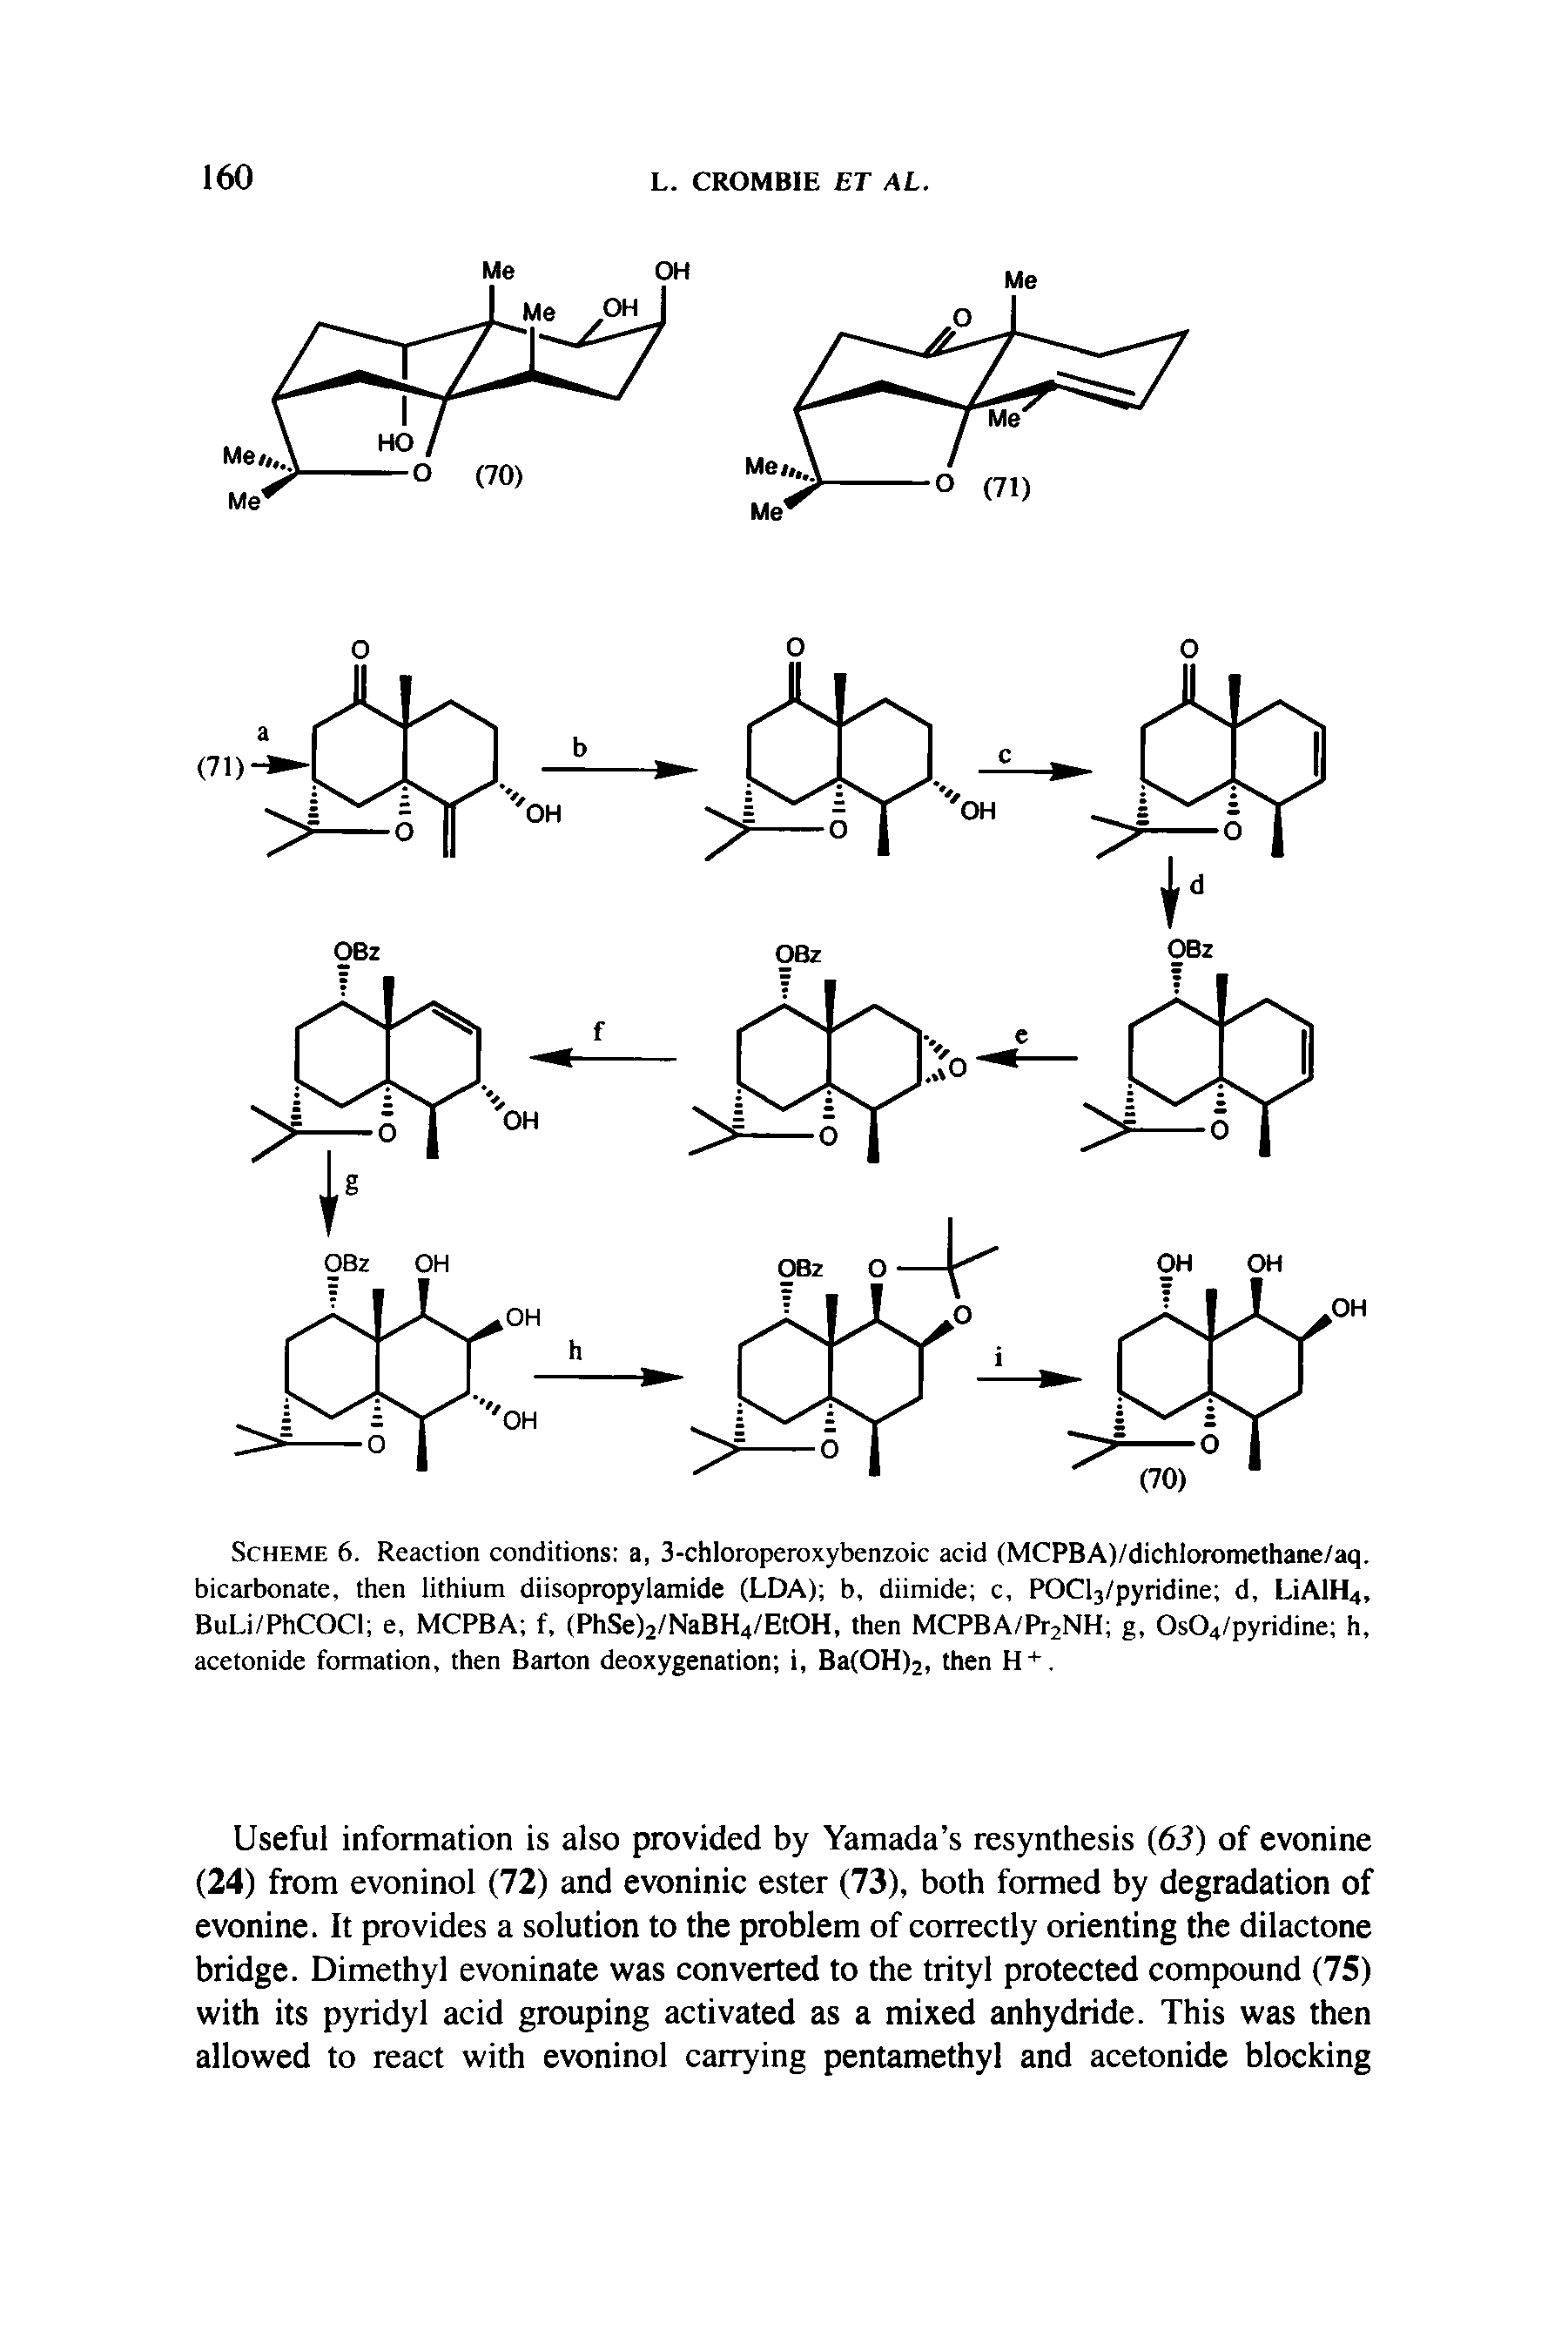 Scheme 6. Reaction conditions a, 3-chloroperoxybenzoic acid (MCPBA)/dichloromethane/aq. bicarbonate, then lithium diisopropylamide (LDA) b, diimide c, POCl3/pyridine d, LiAlH4, BuLi/PhCOCI e, MCPBA f, (PhSe)2/NaBH4/EtOH, then MCPBA/Pr2NH g, 0s04/pyridine h, acetonide formation, then Barton deoxygenation i, Ba(OH)2, then H +. ...